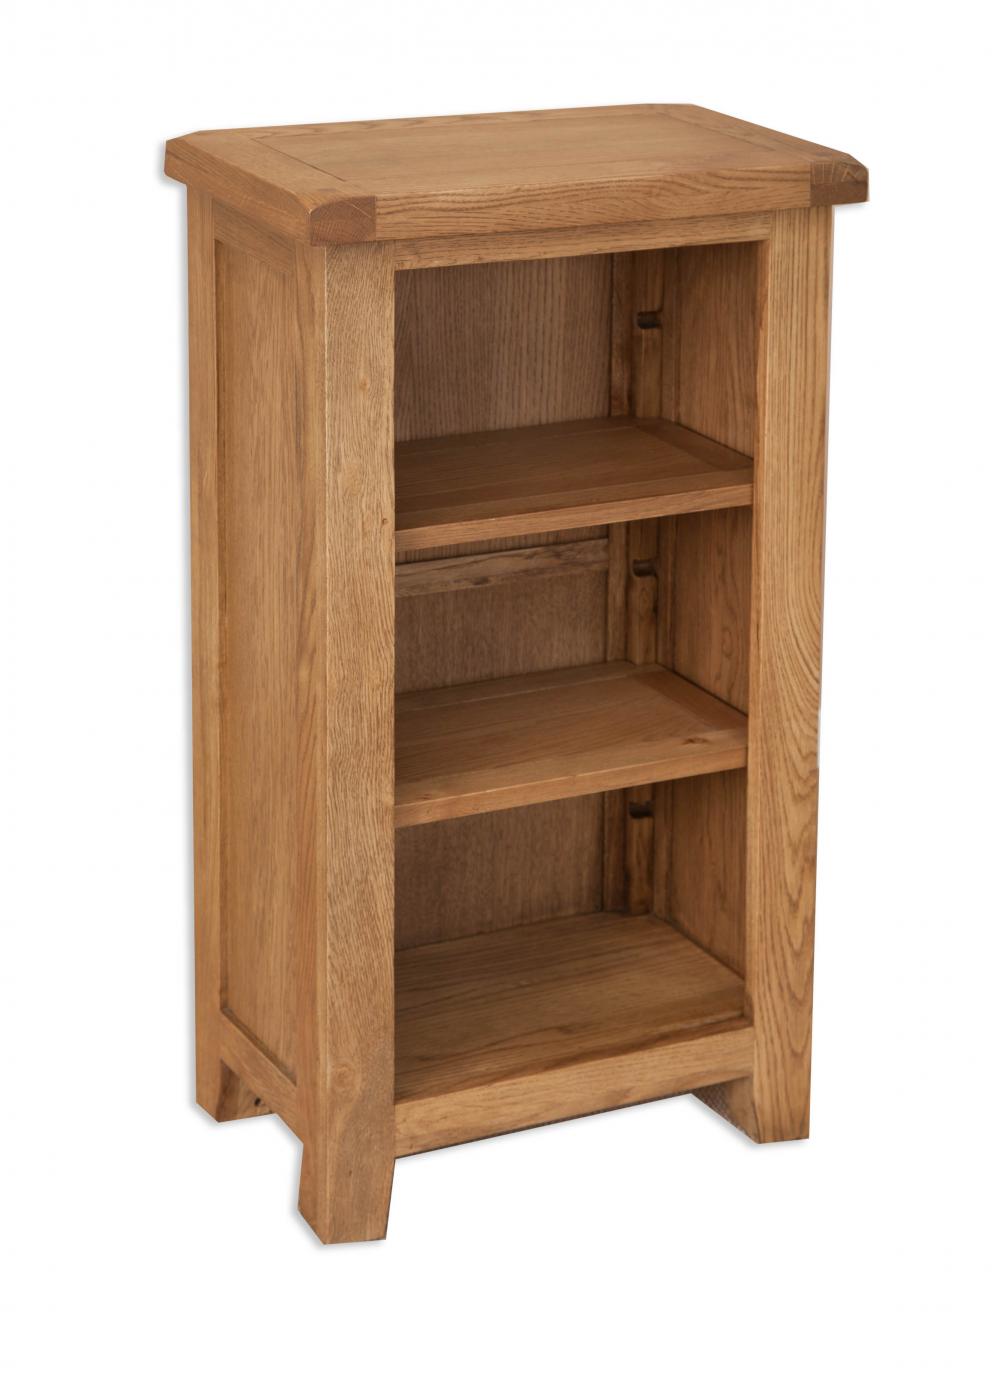 Country Oak Small Bookcase £229